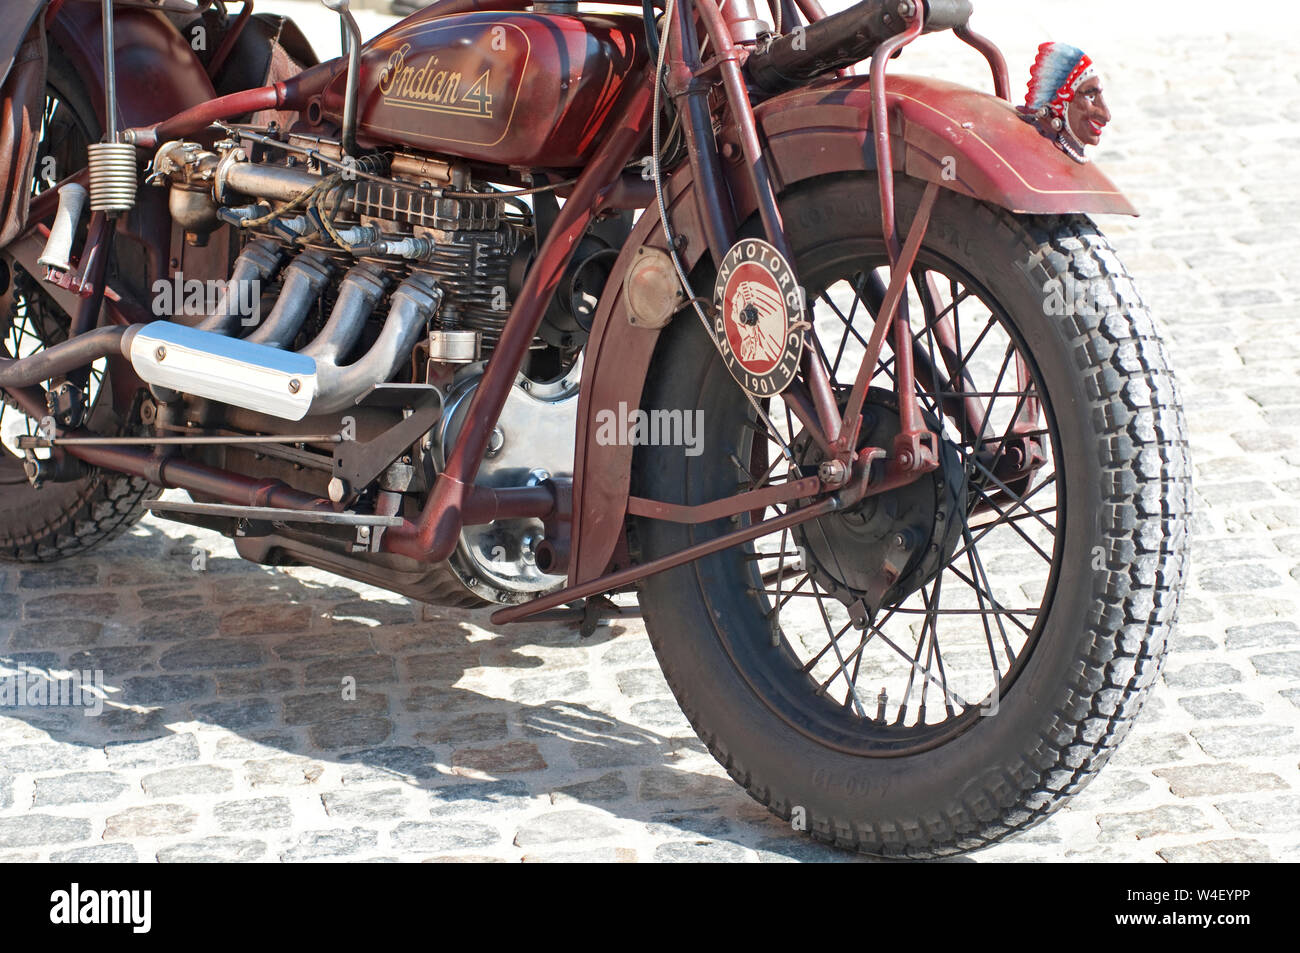 American Indian Head auf einem Vintage Indian Scout Motorrad Oldtimer  Stockfotografie - Alamy